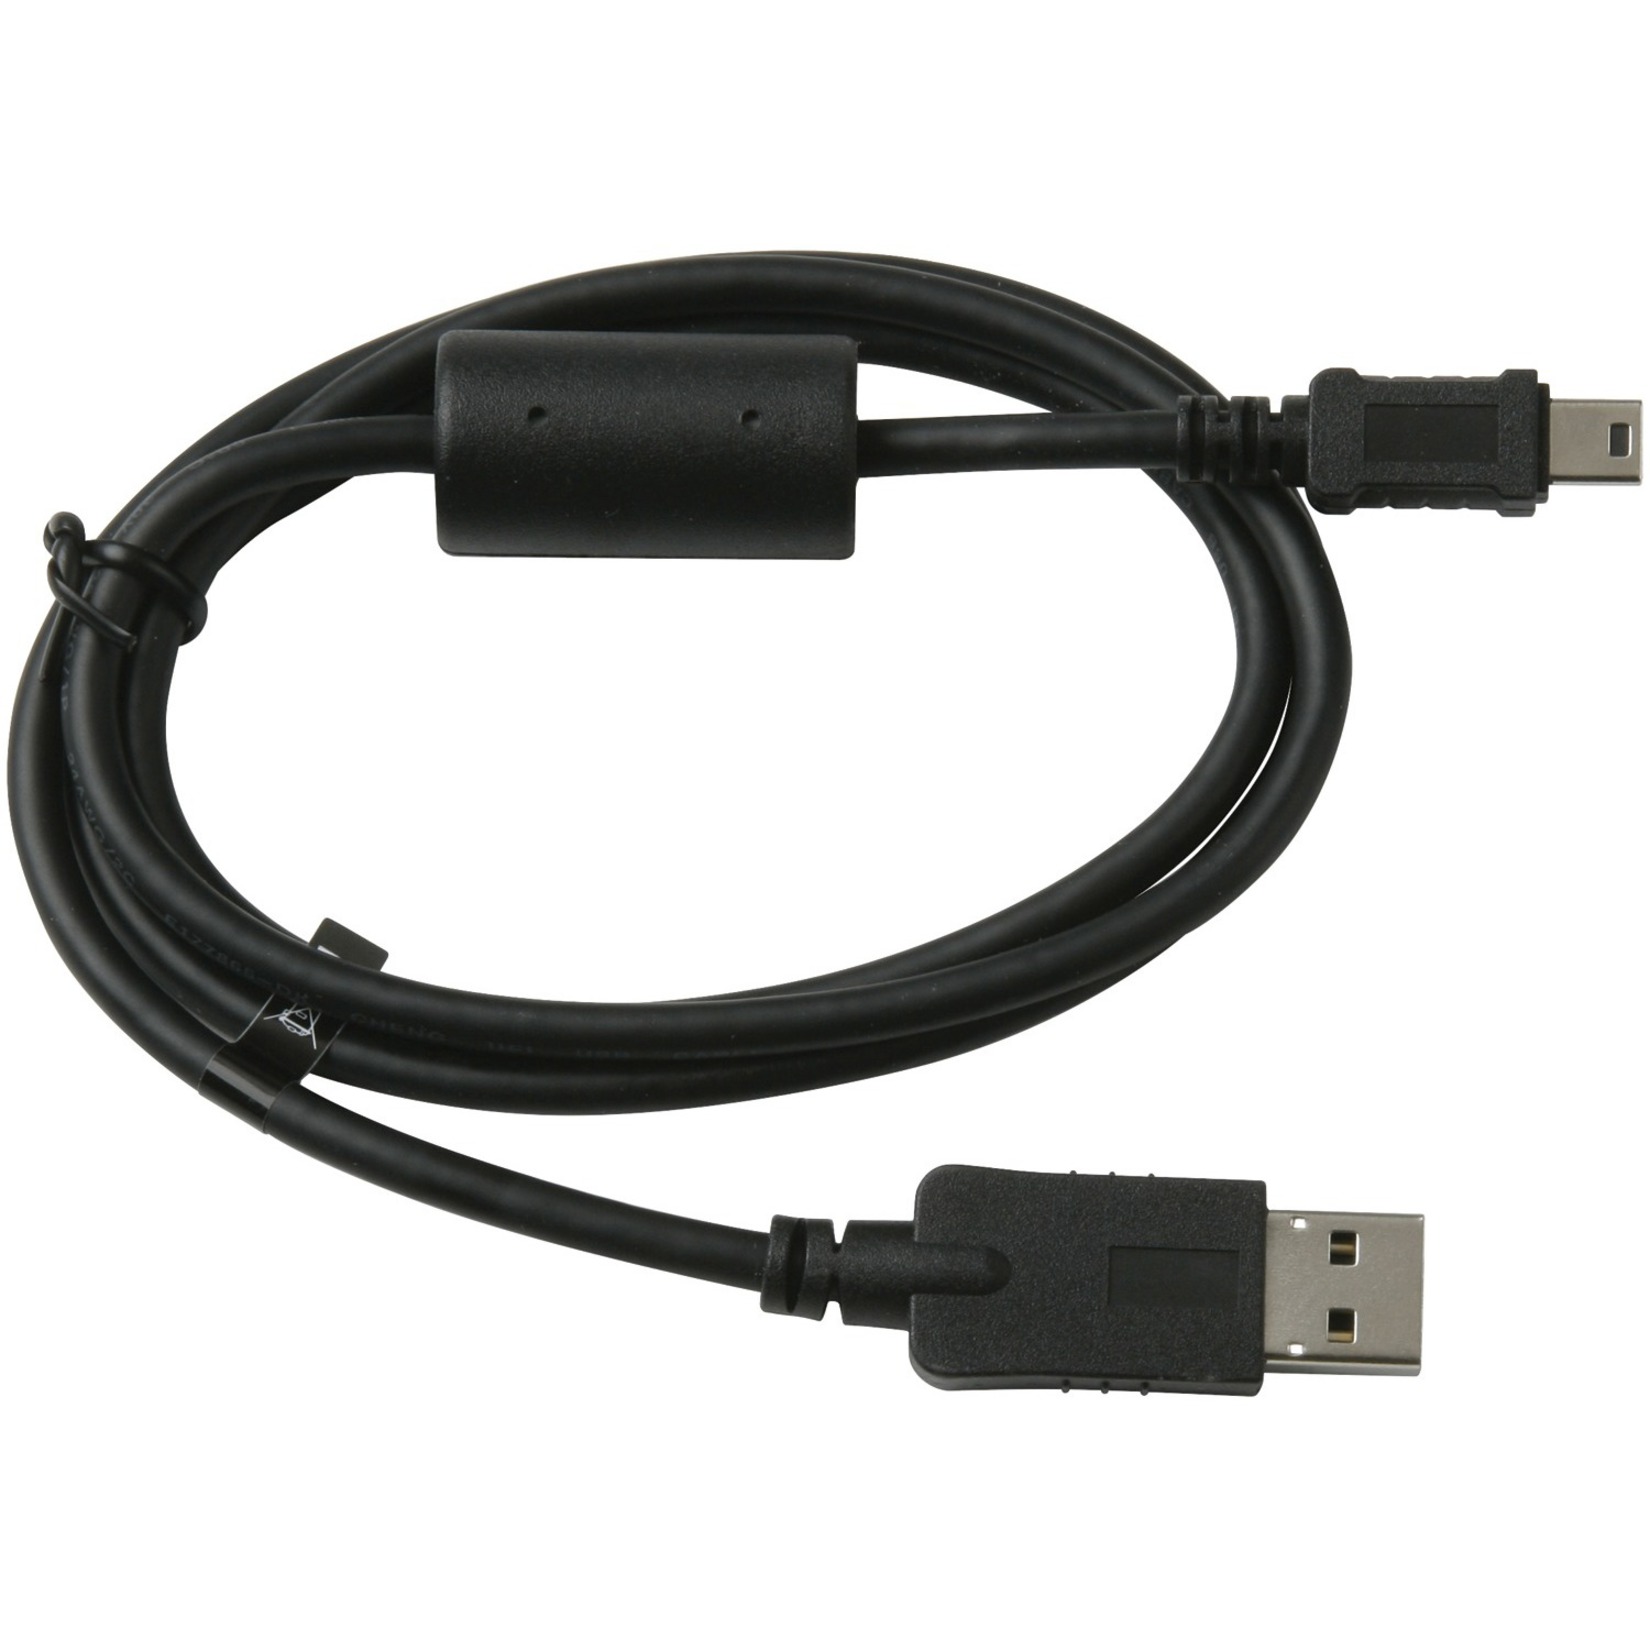 Garmin 010-10723-01 USB to Mini USB Data Cable - image 3 of 5